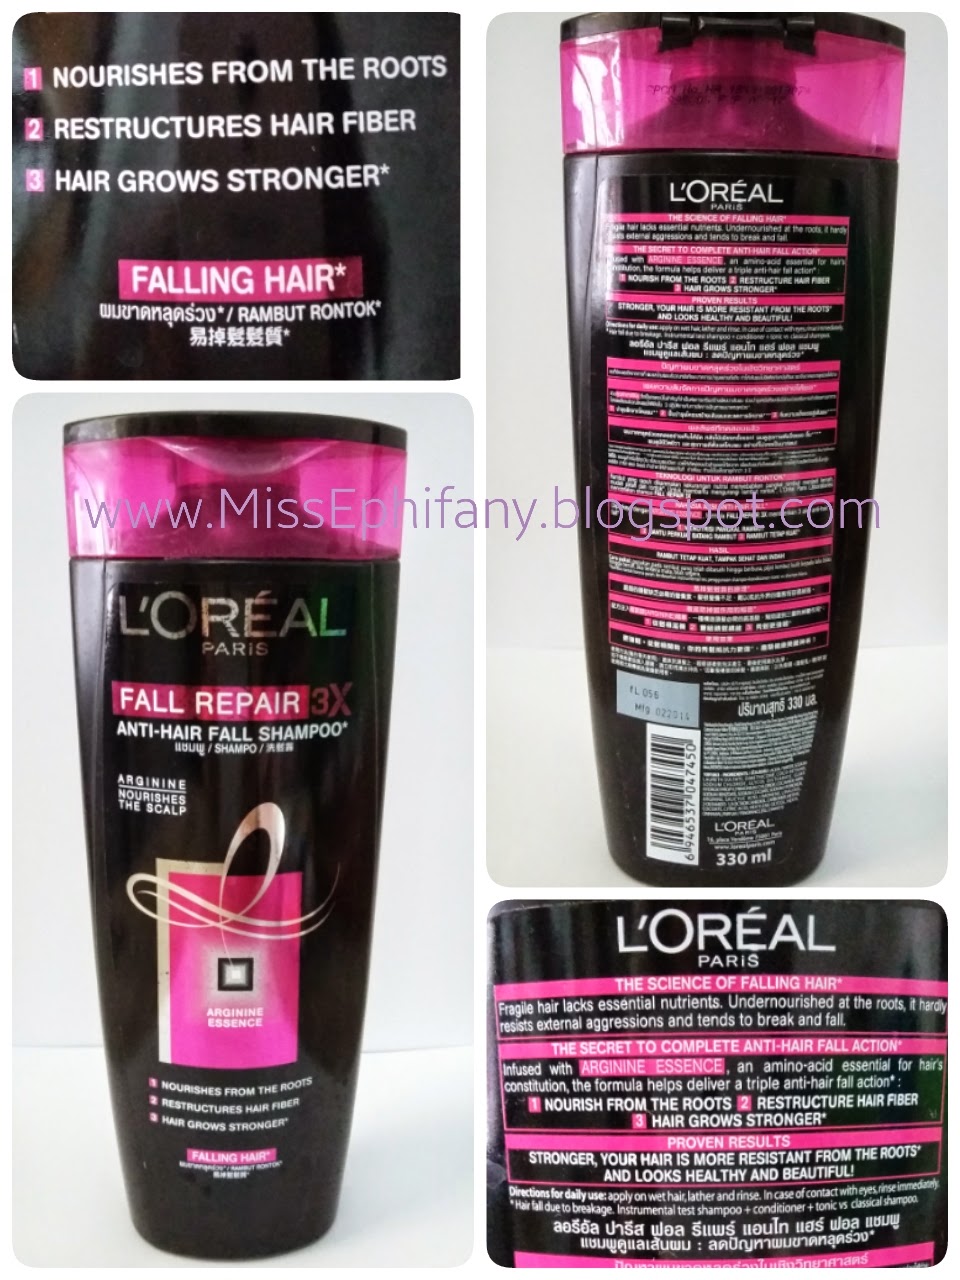 L'Oreal Paris Fall Repair 3X Anti-Hairfall Shampoo Review - Miss Ephifany